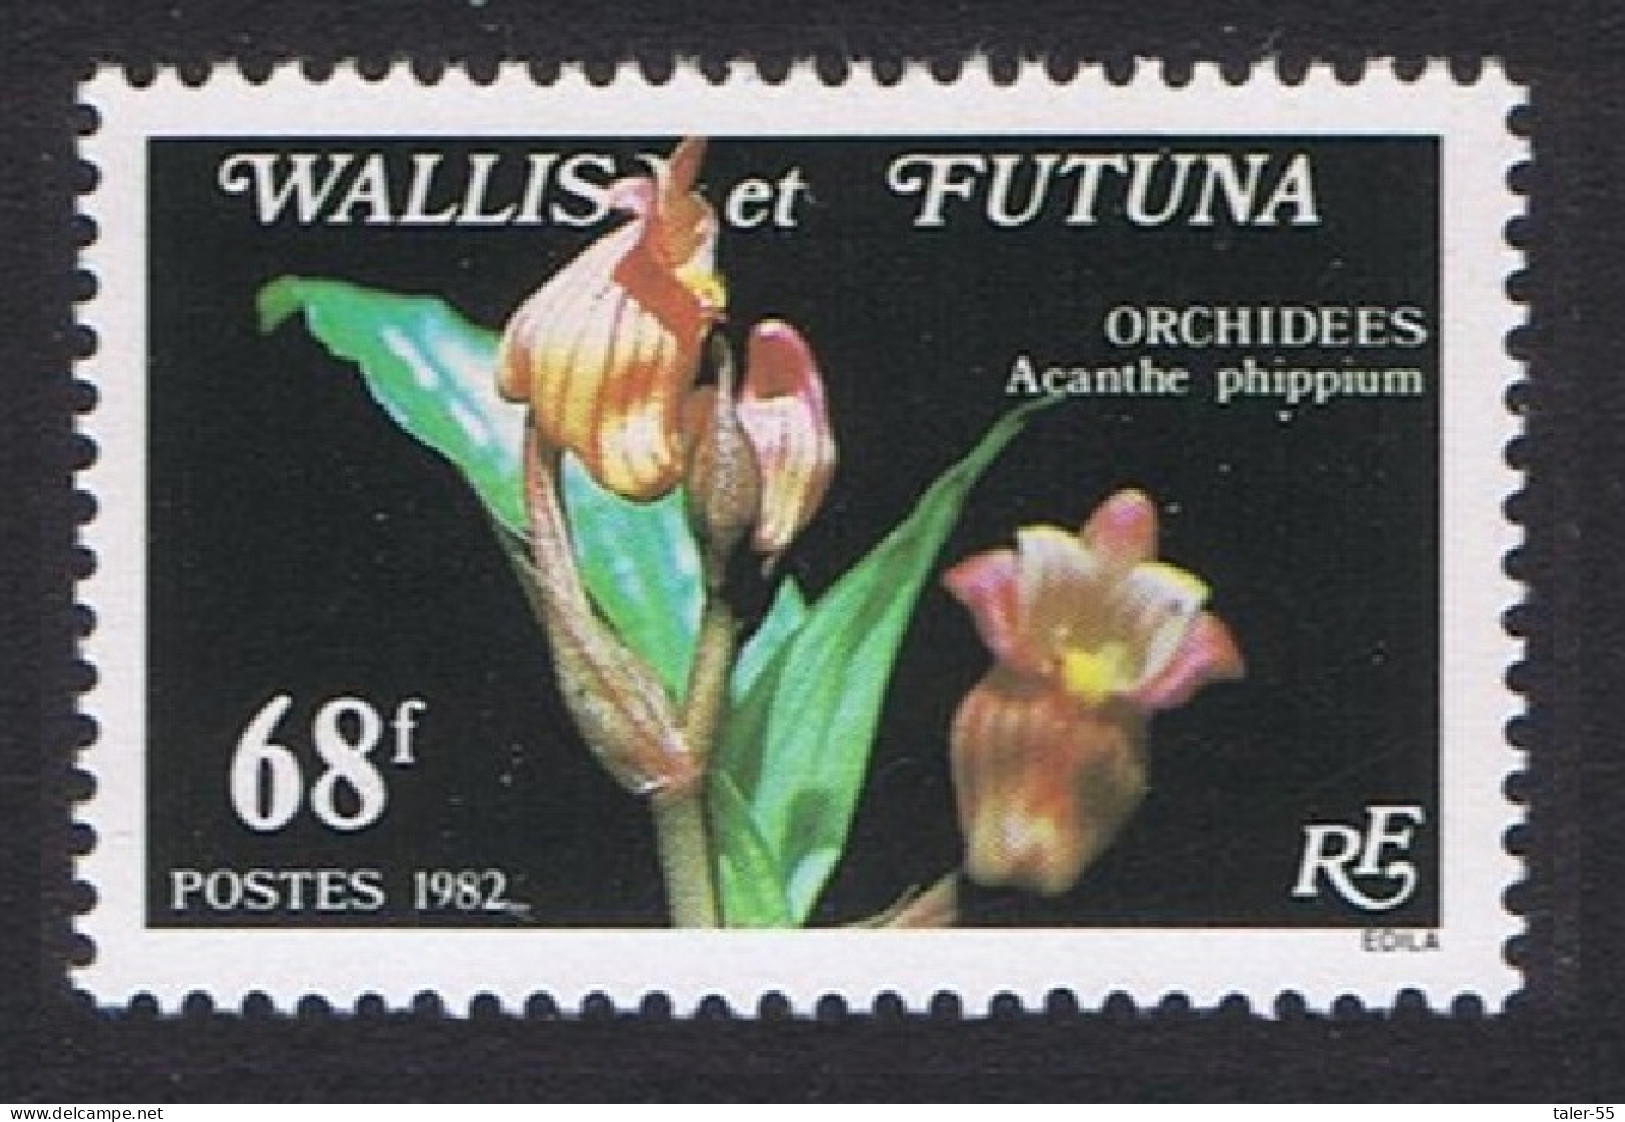 Wallis And Futuna Orchids Acanthe Phippium 68f 1982 MNH SG#397 Sc#284 - Neufs